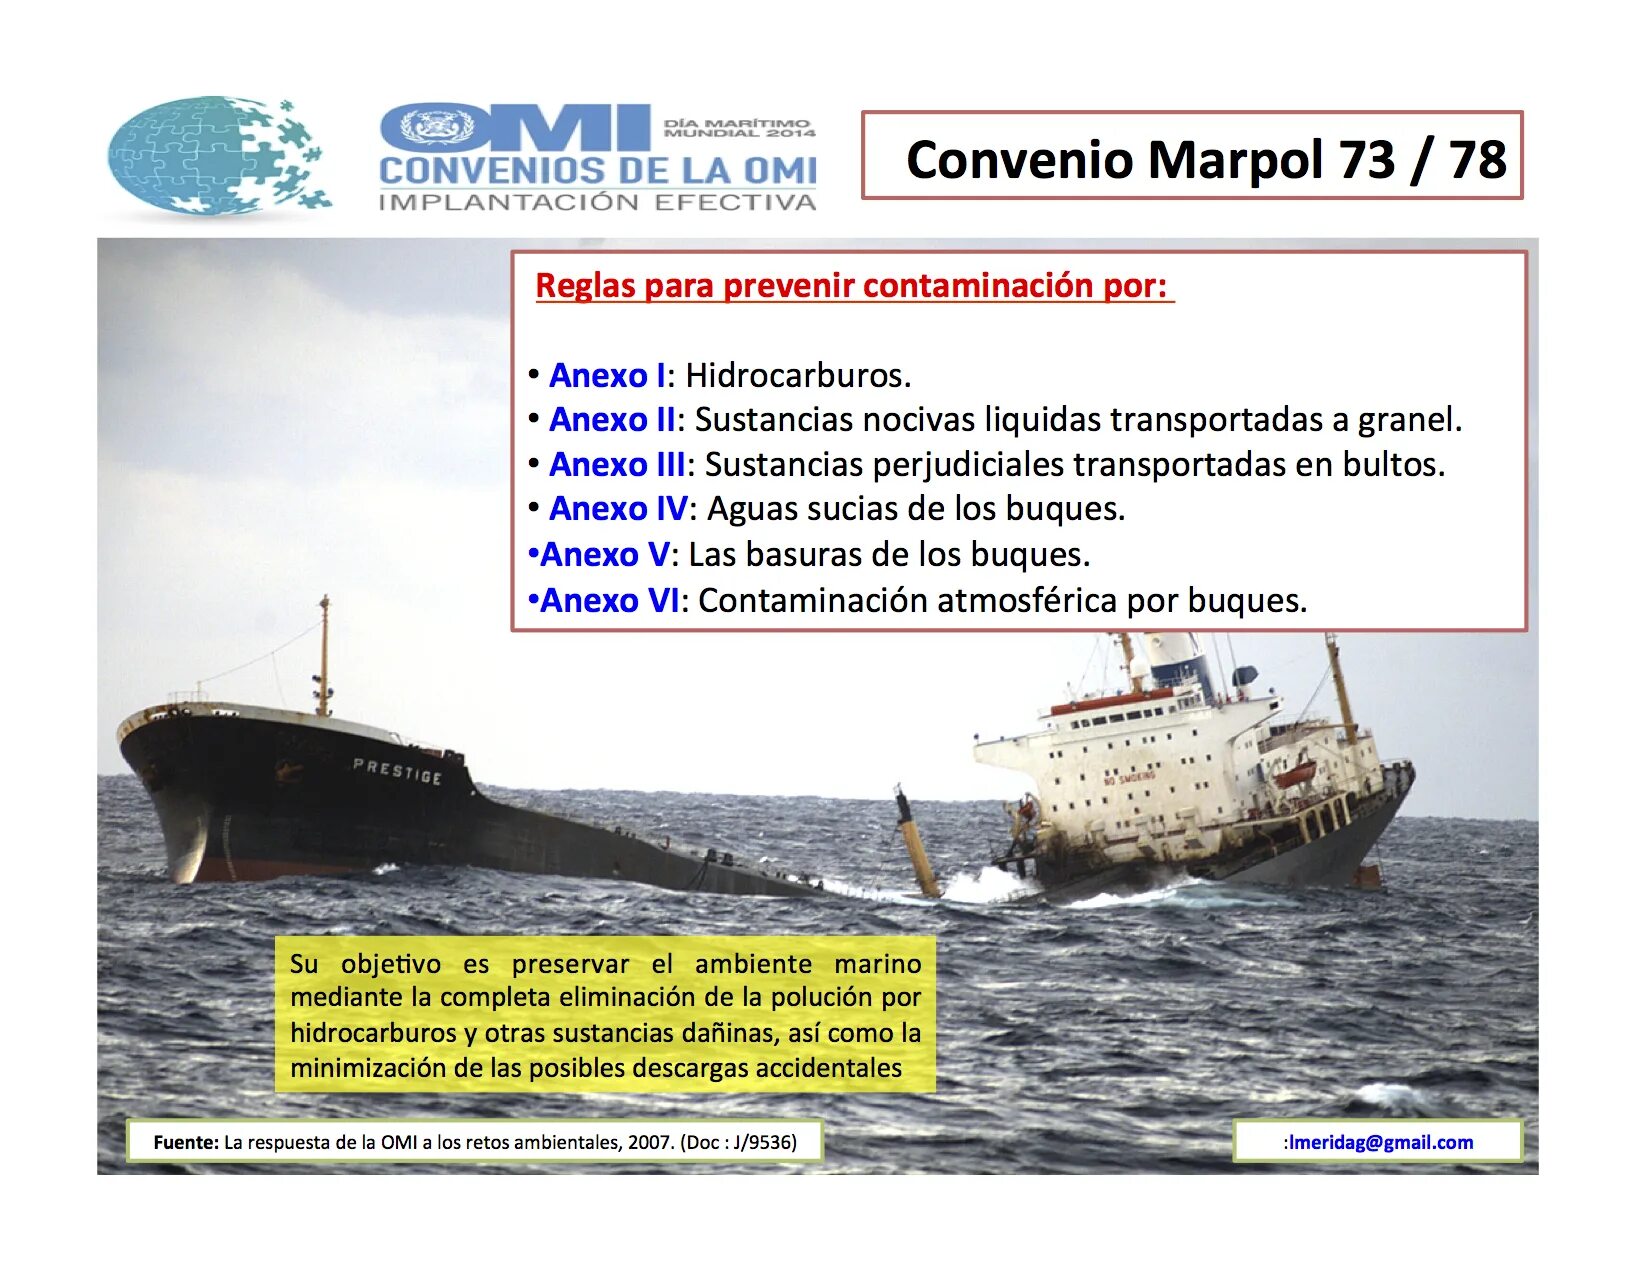 Приложения конвенции марпол. MARPOL 73/78. MARPOL Annex all. MARPOL приложения. МАРПОЛ Мореплавание.